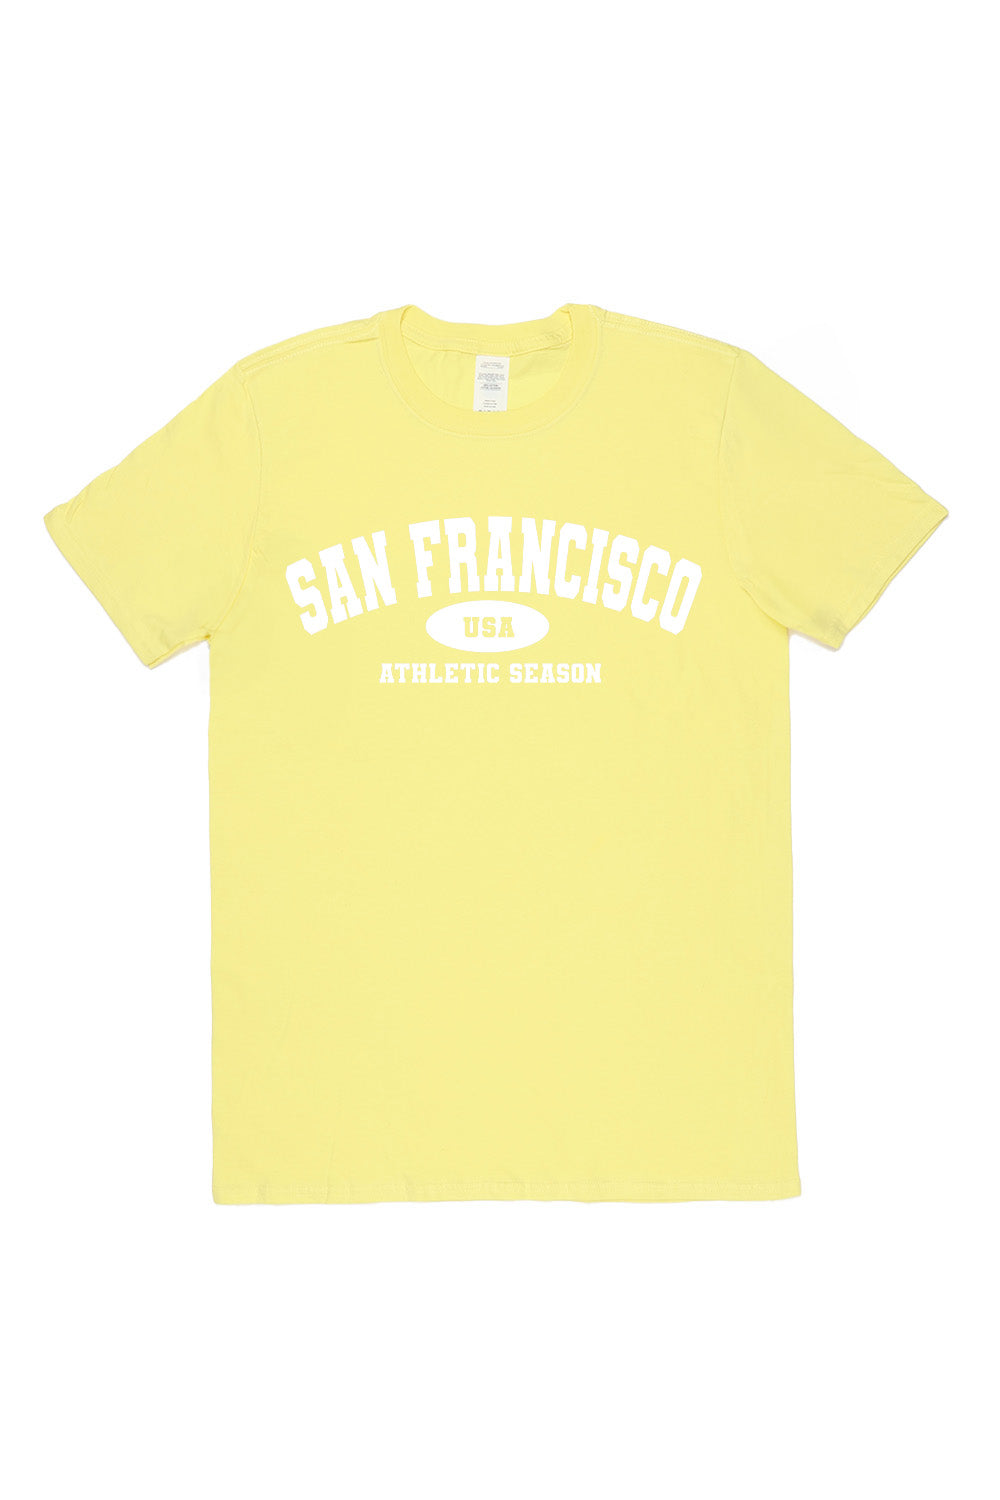 San Francisco T-Shirt in Yellow (Custom Packs)